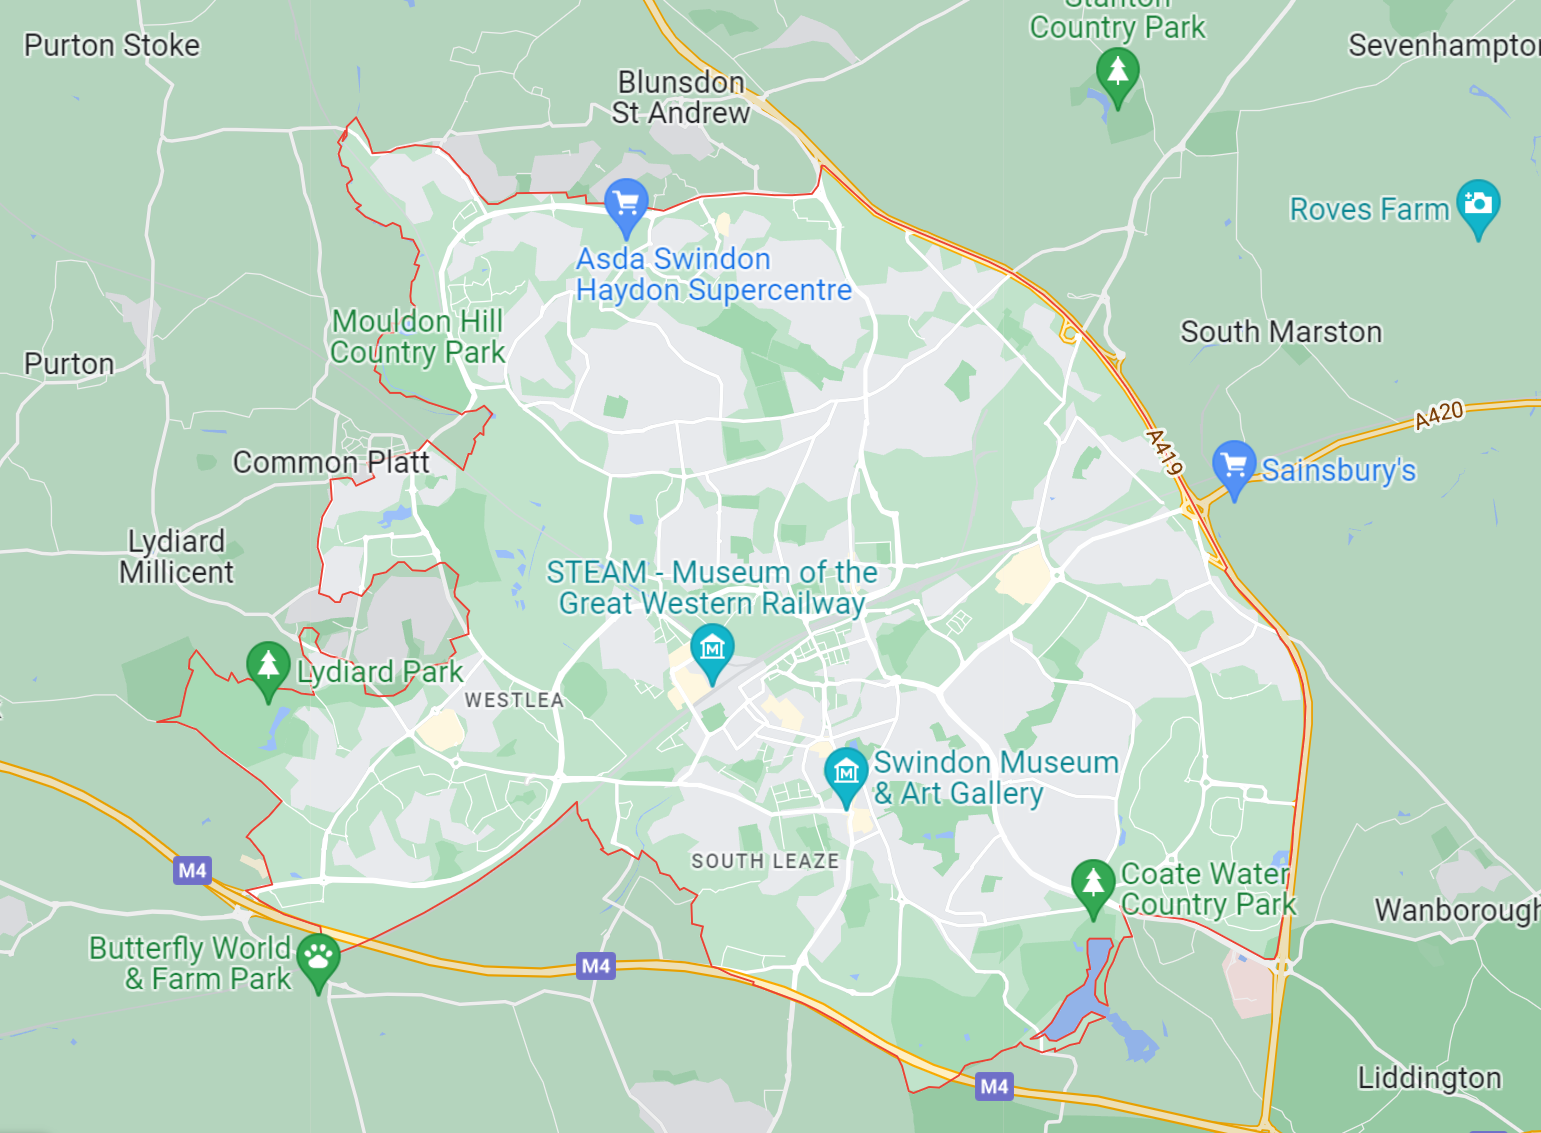 Map of Healthwatch Swindon area